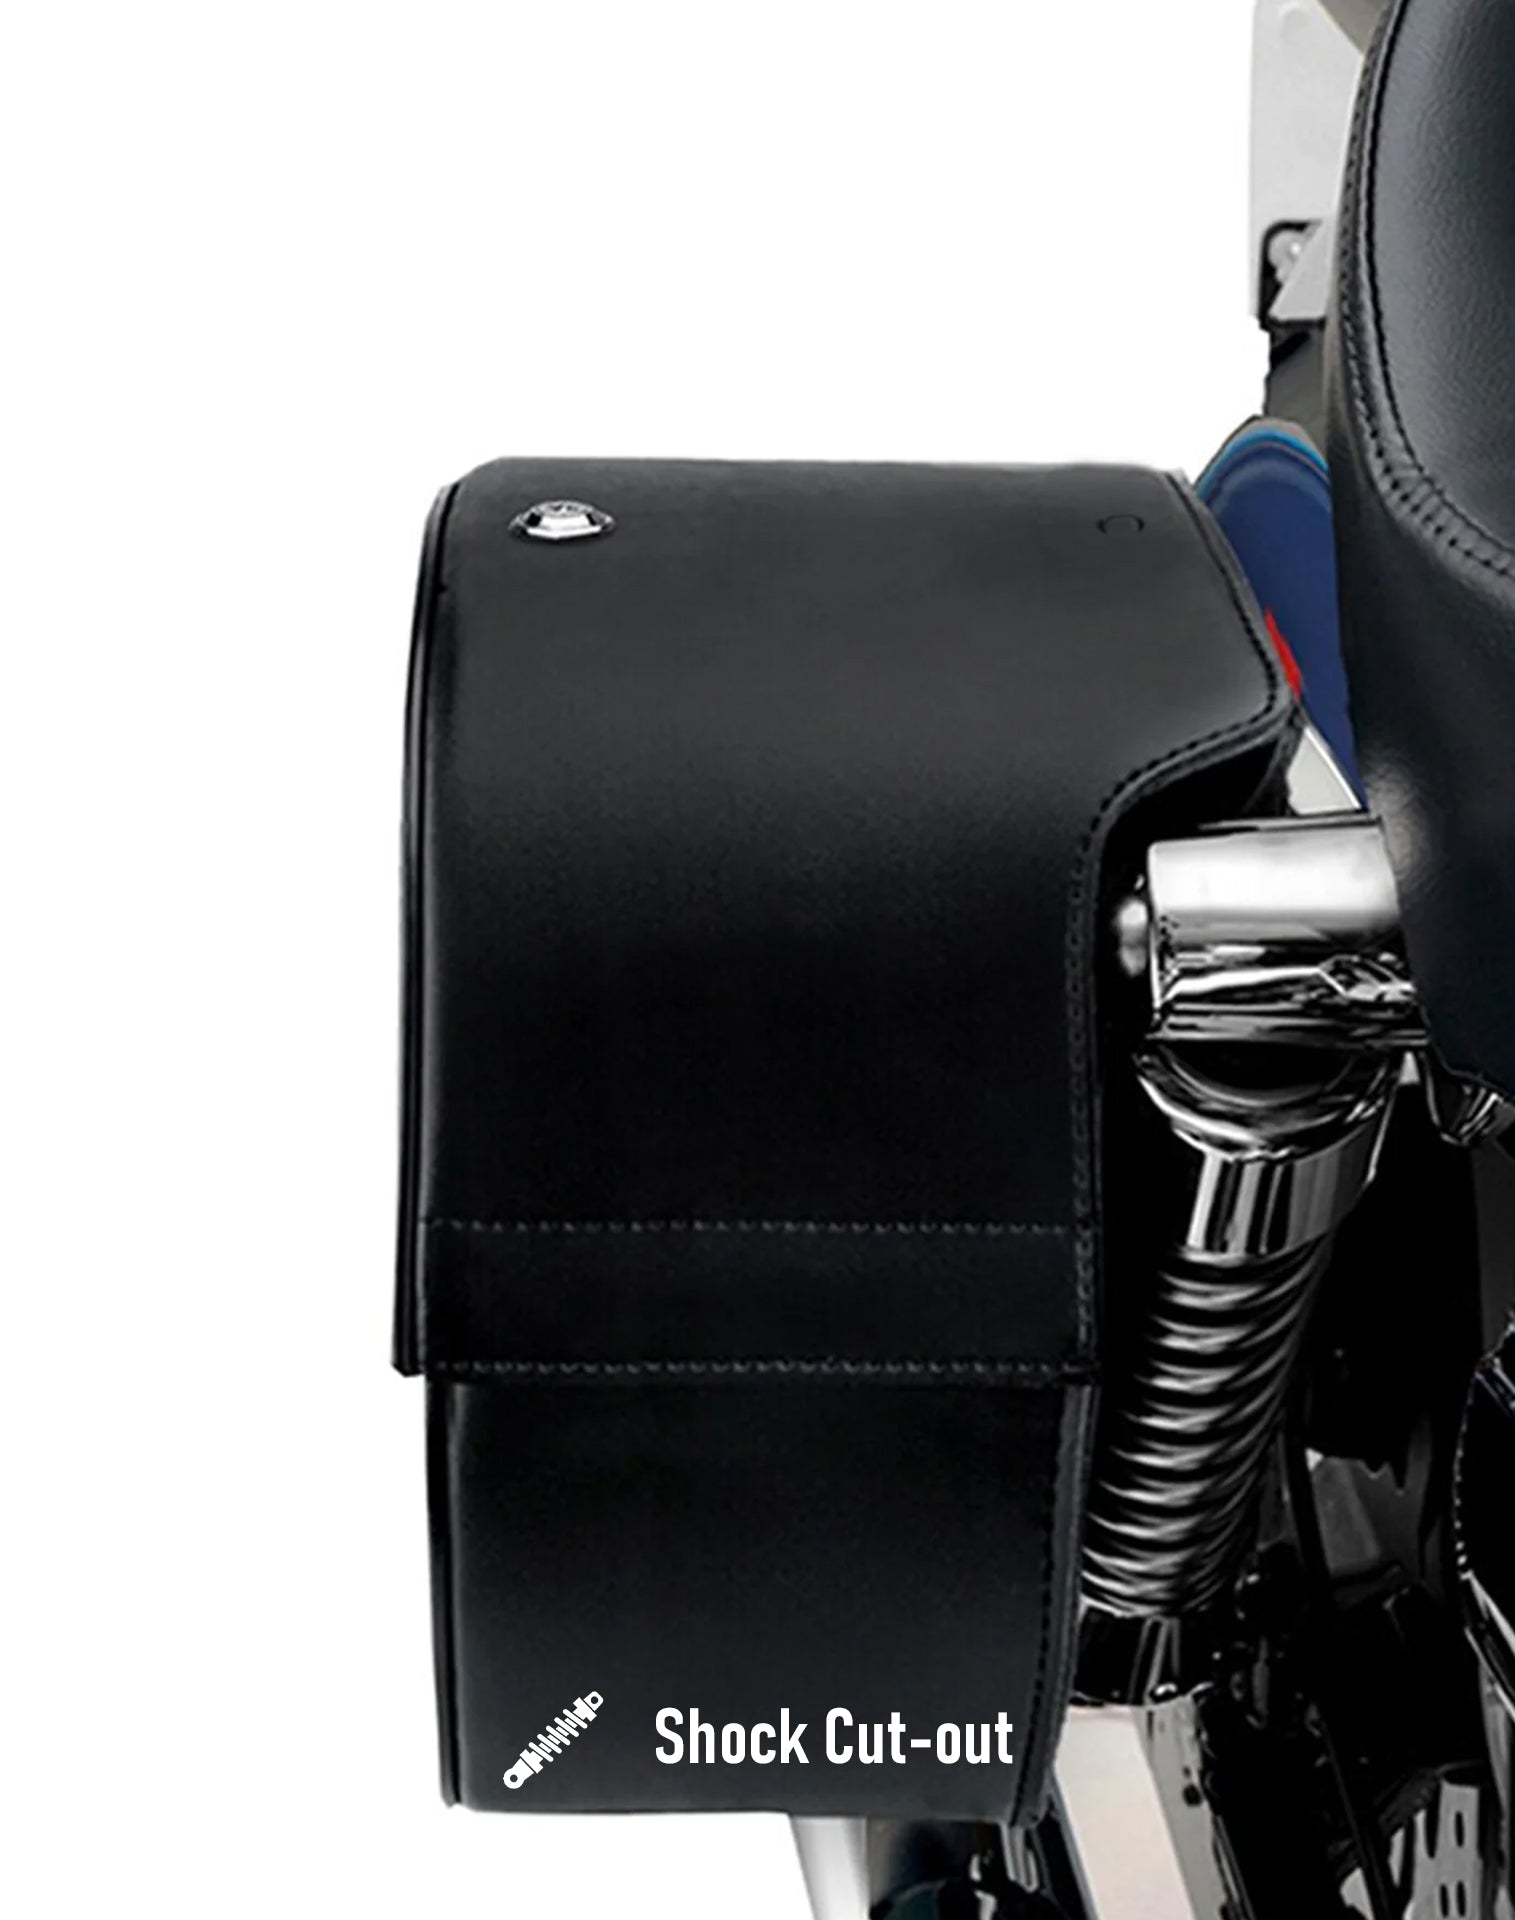 Viking Skarner Large Shock Cut Out Leather Motorcycle Saddlebags For Harley Dyna Super Glide Fxd I Hard Shell Construction